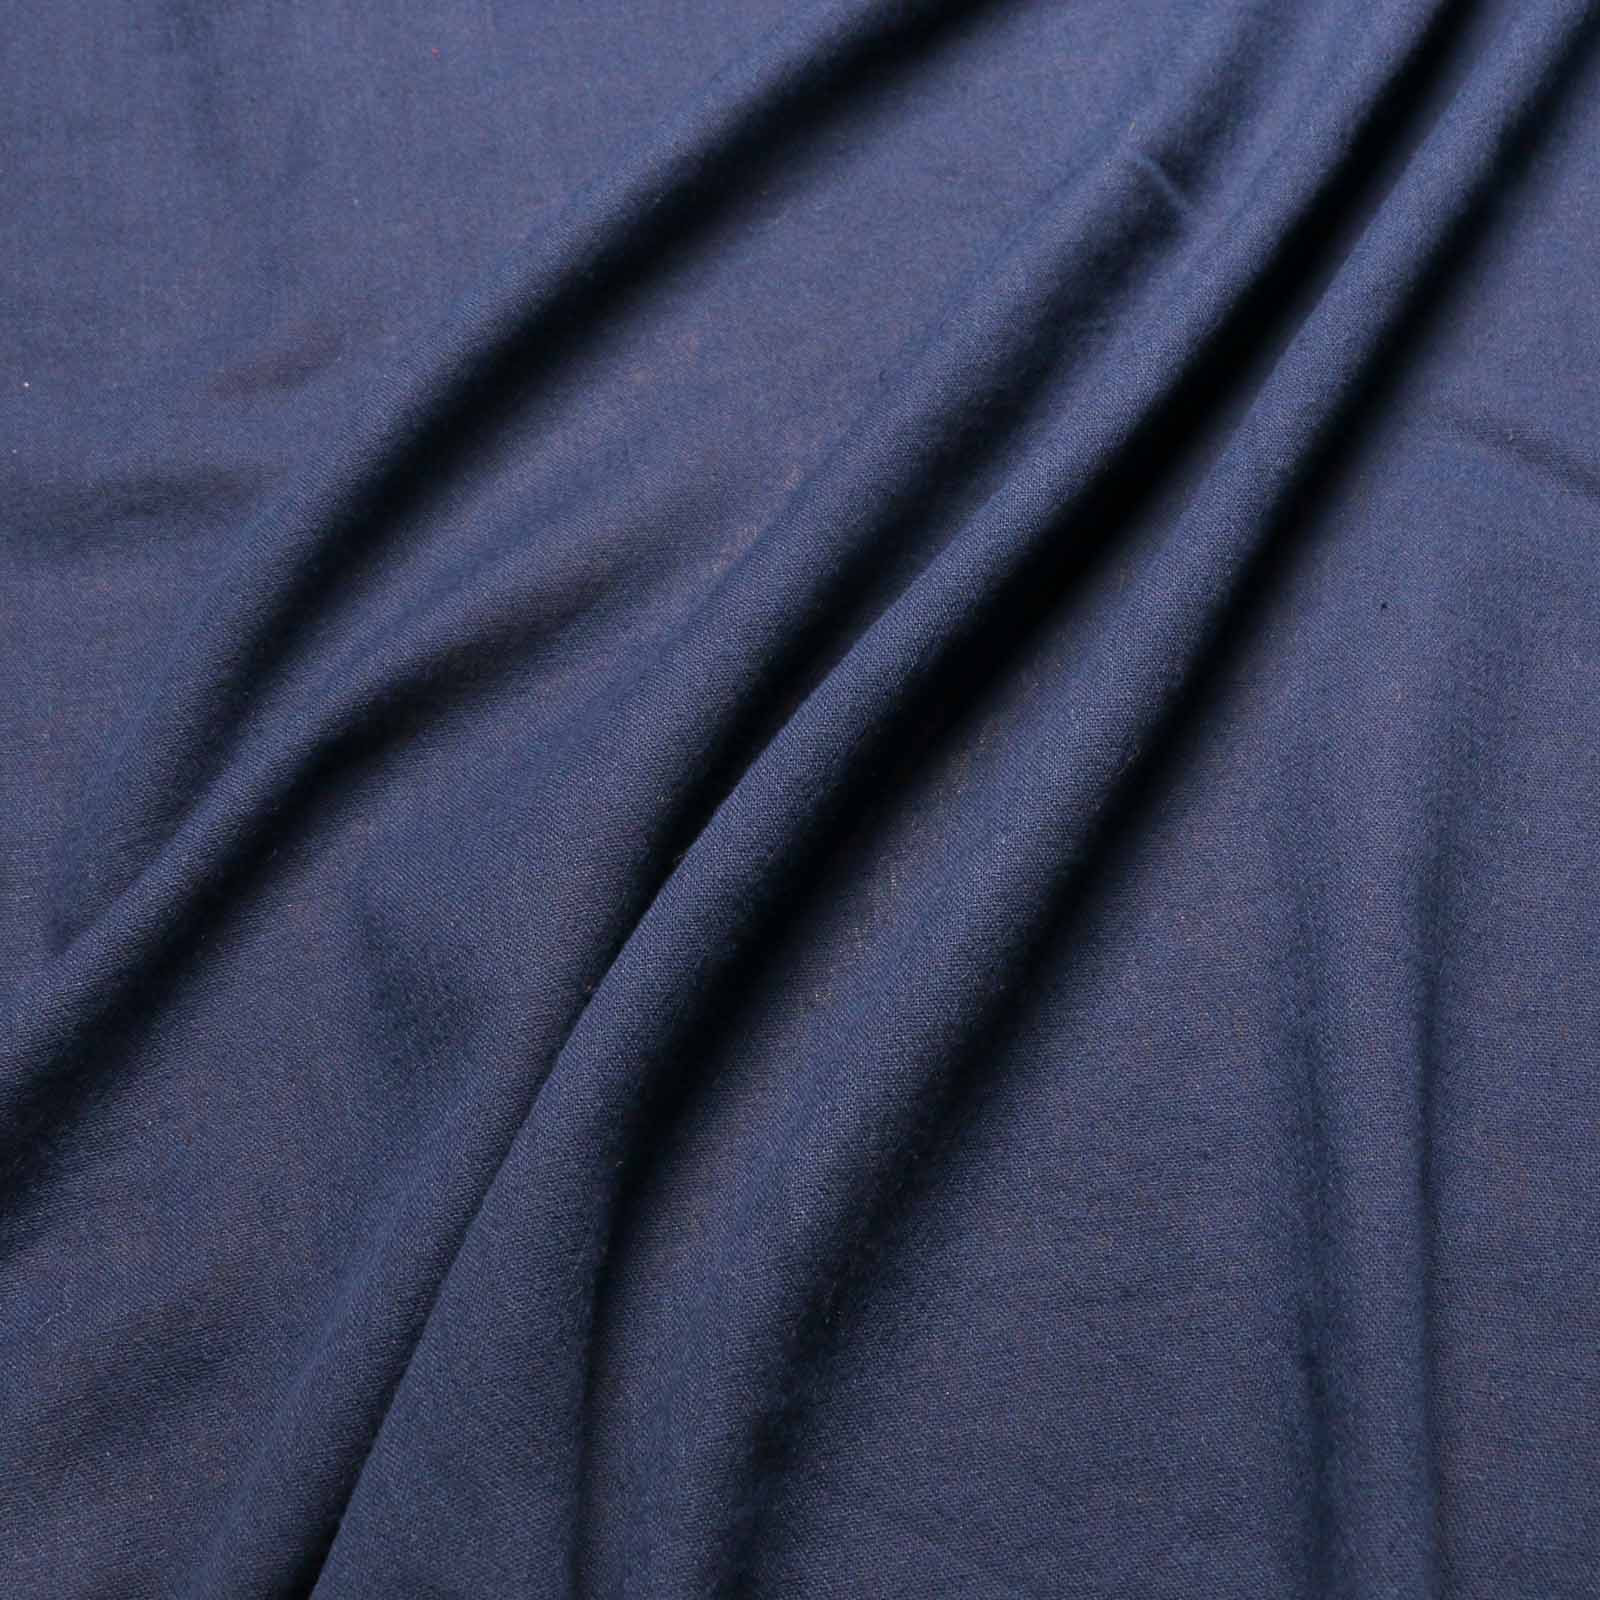 crinkle textured plain navy cotton gauze dressmaking fabric